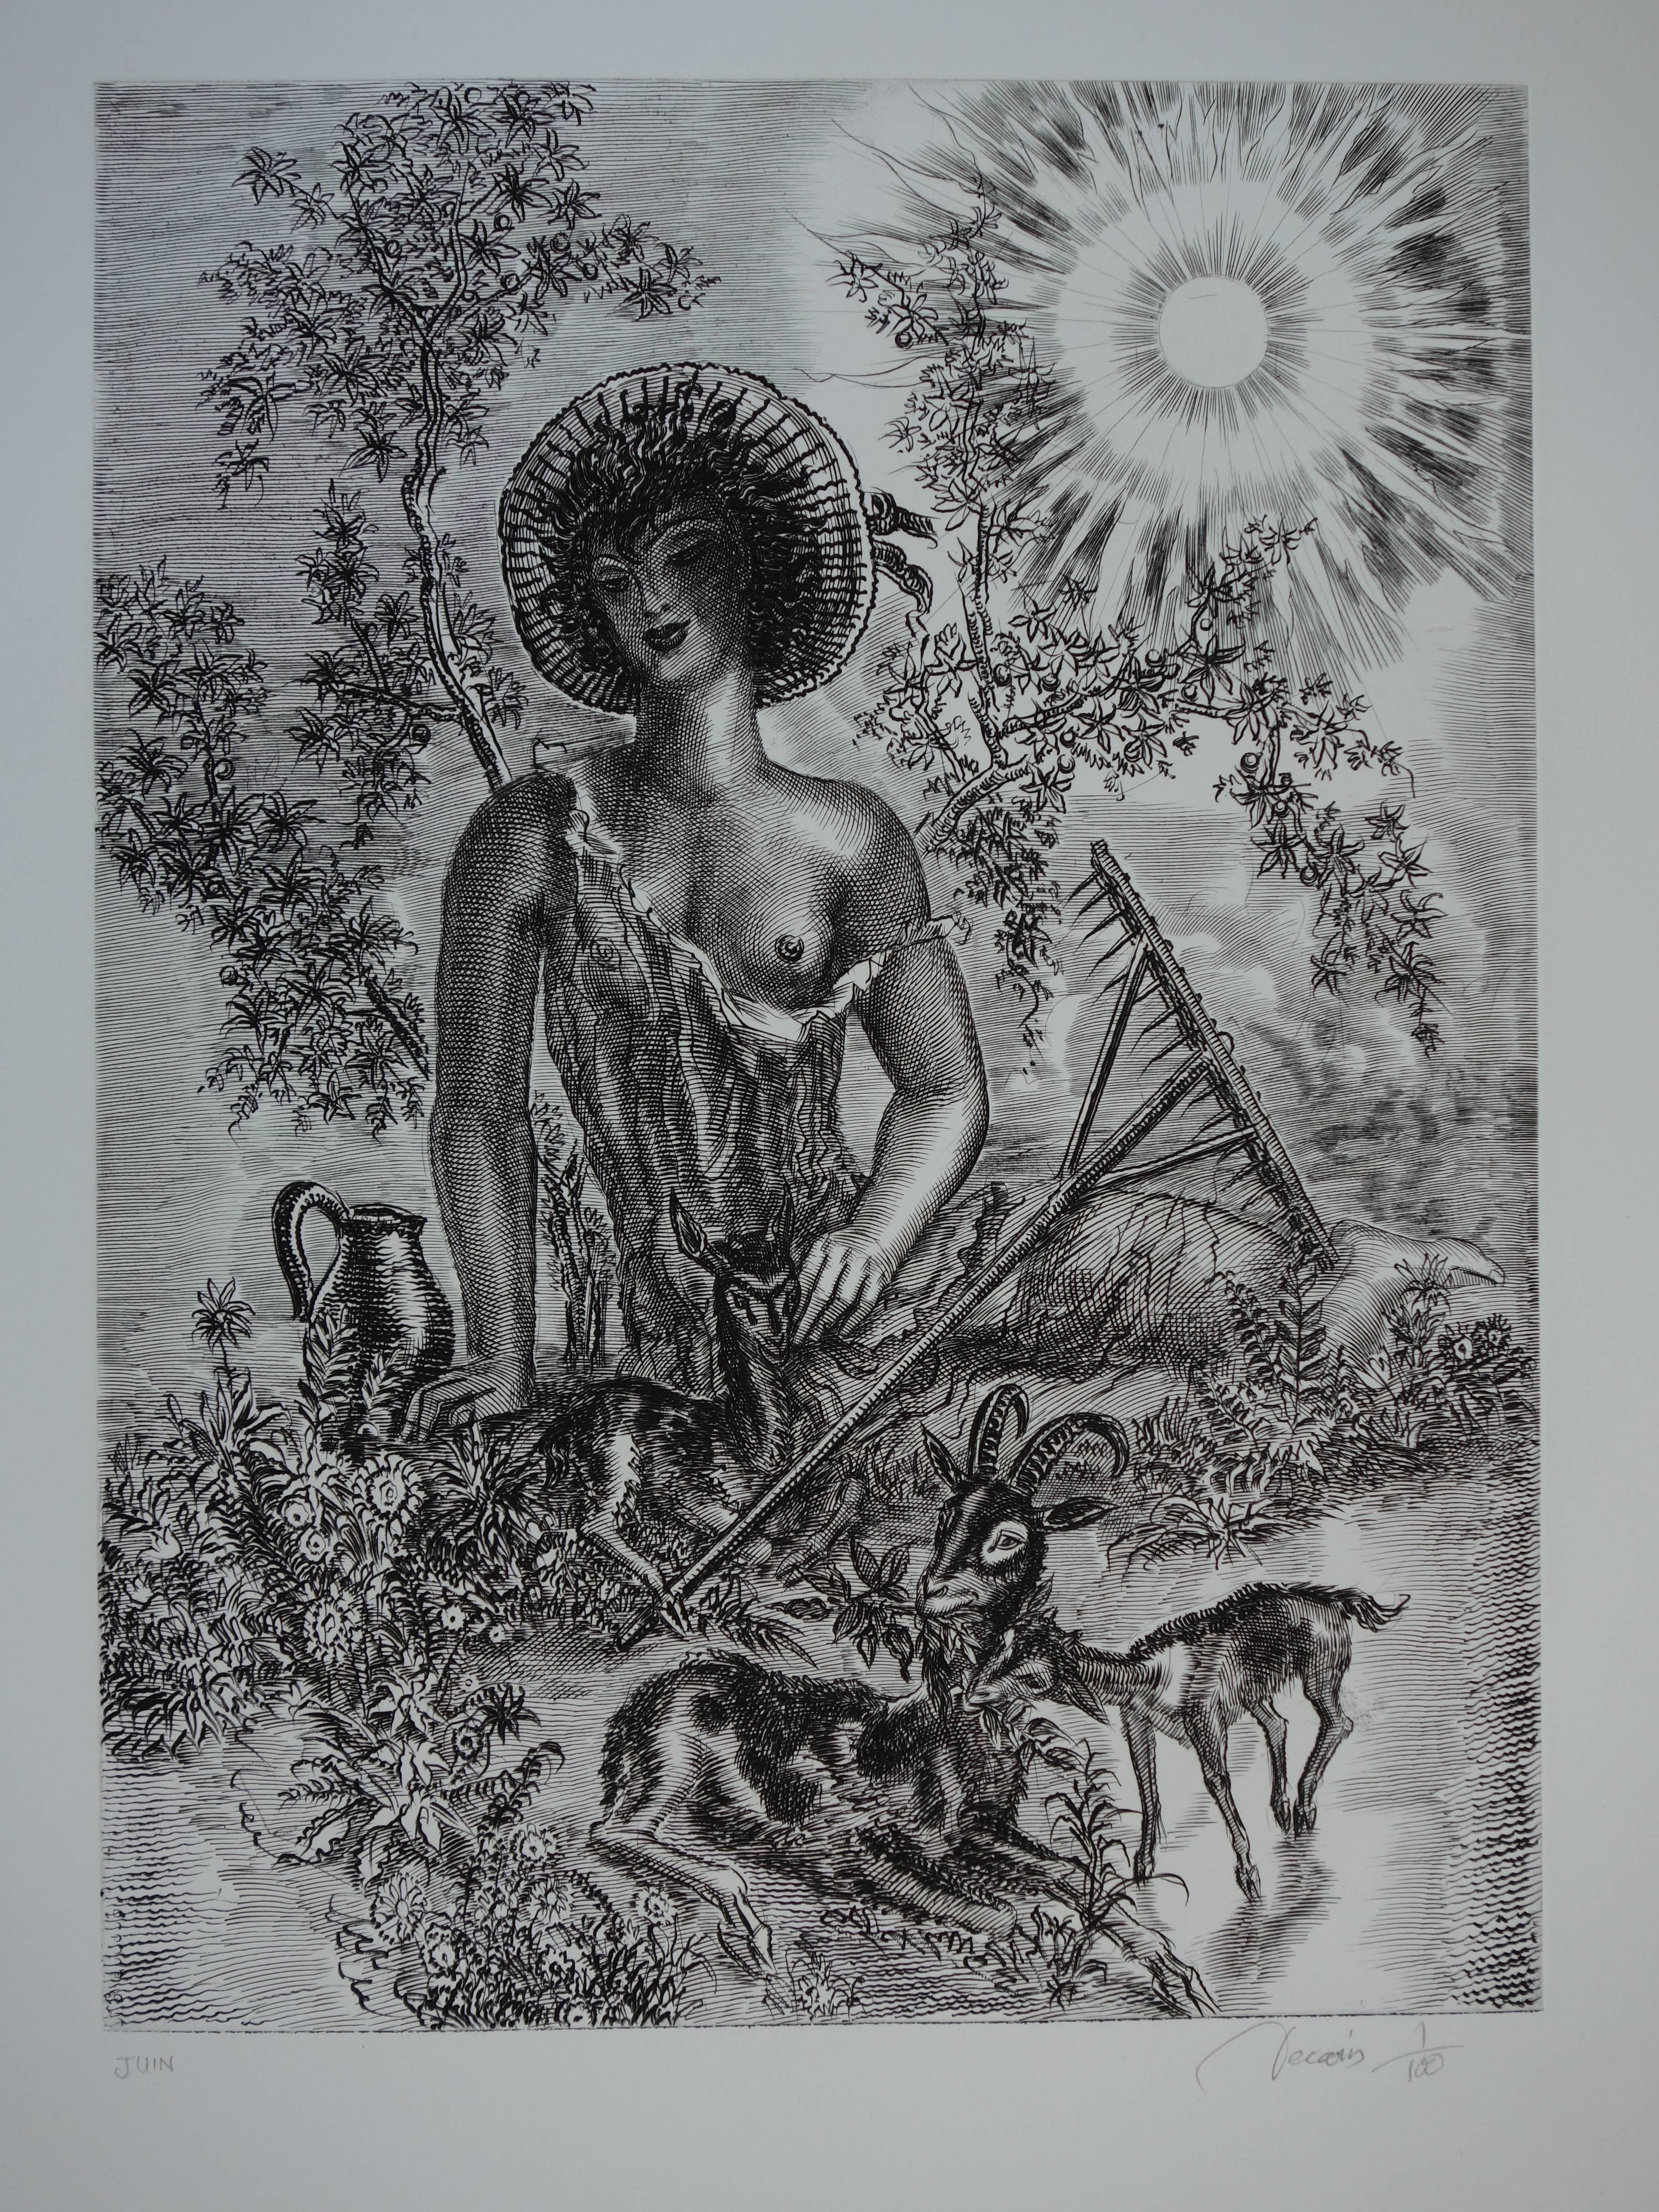 Albert Decaris Figurative Print - June : the Shepherd - Original handsigned etching - Exceptional n° 1/100